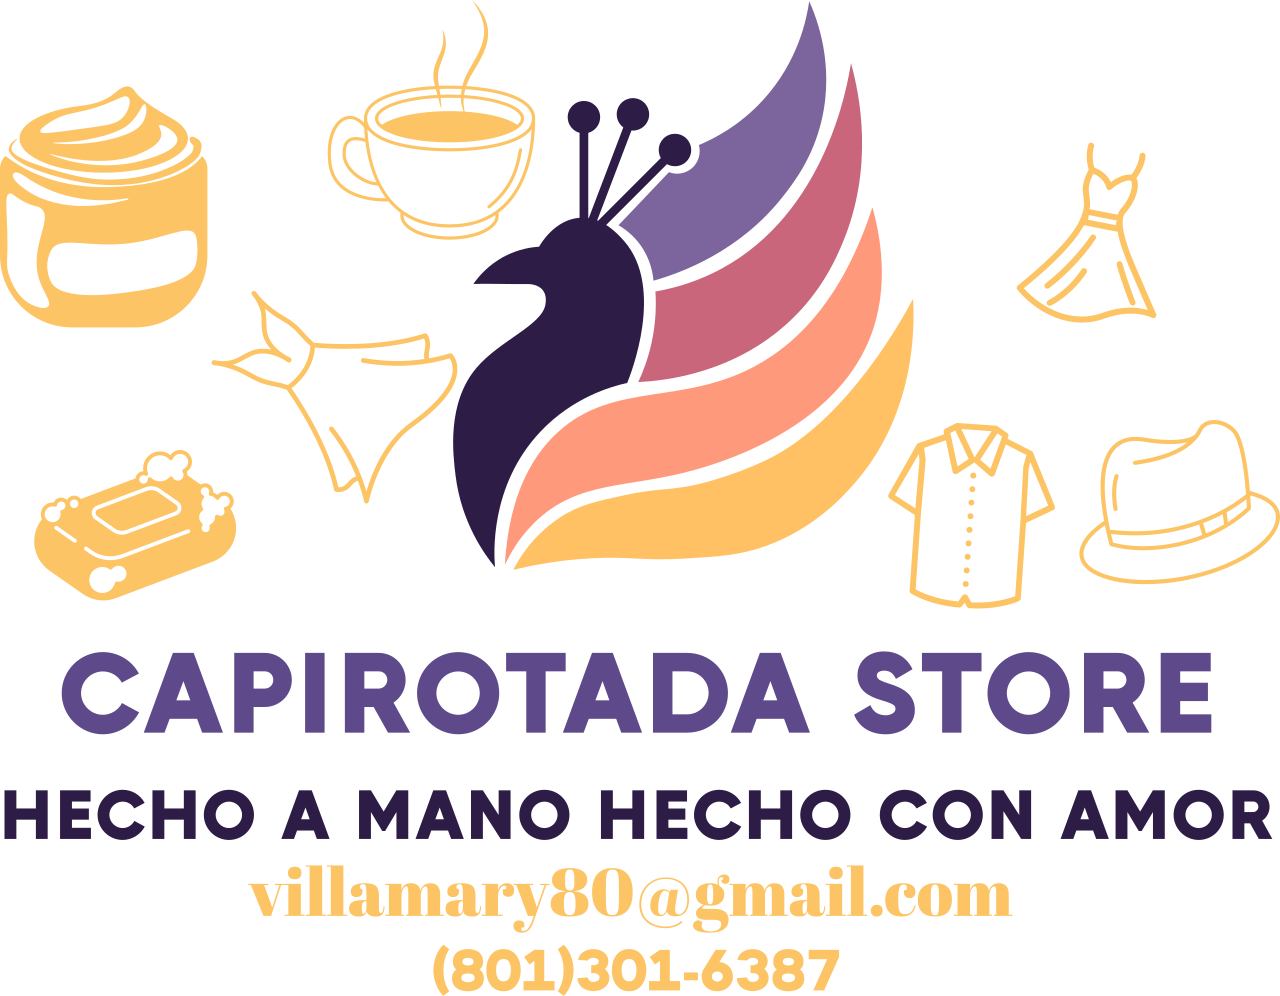 CAPIROTADA STORE's web page